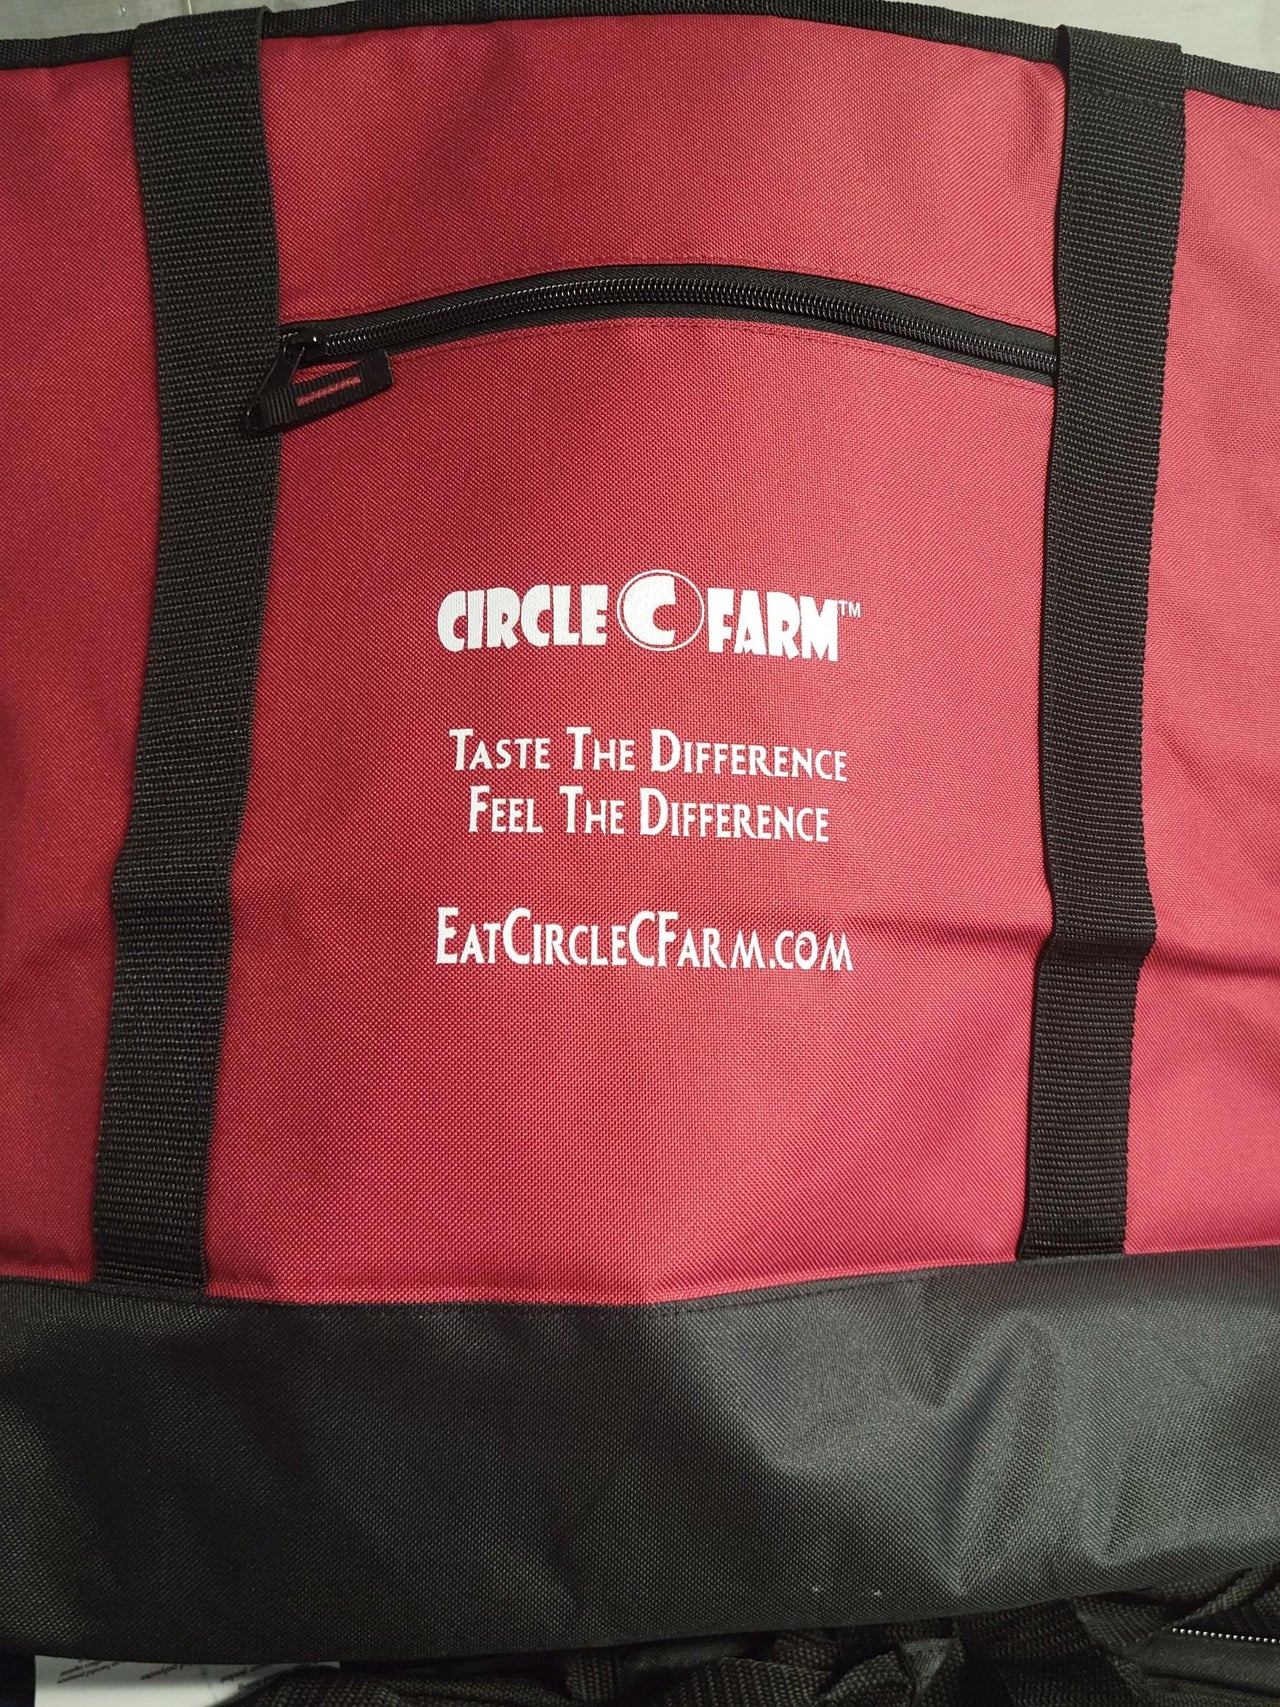 Circle C Farm Insulated Cooler Bag Swag / Merchandise